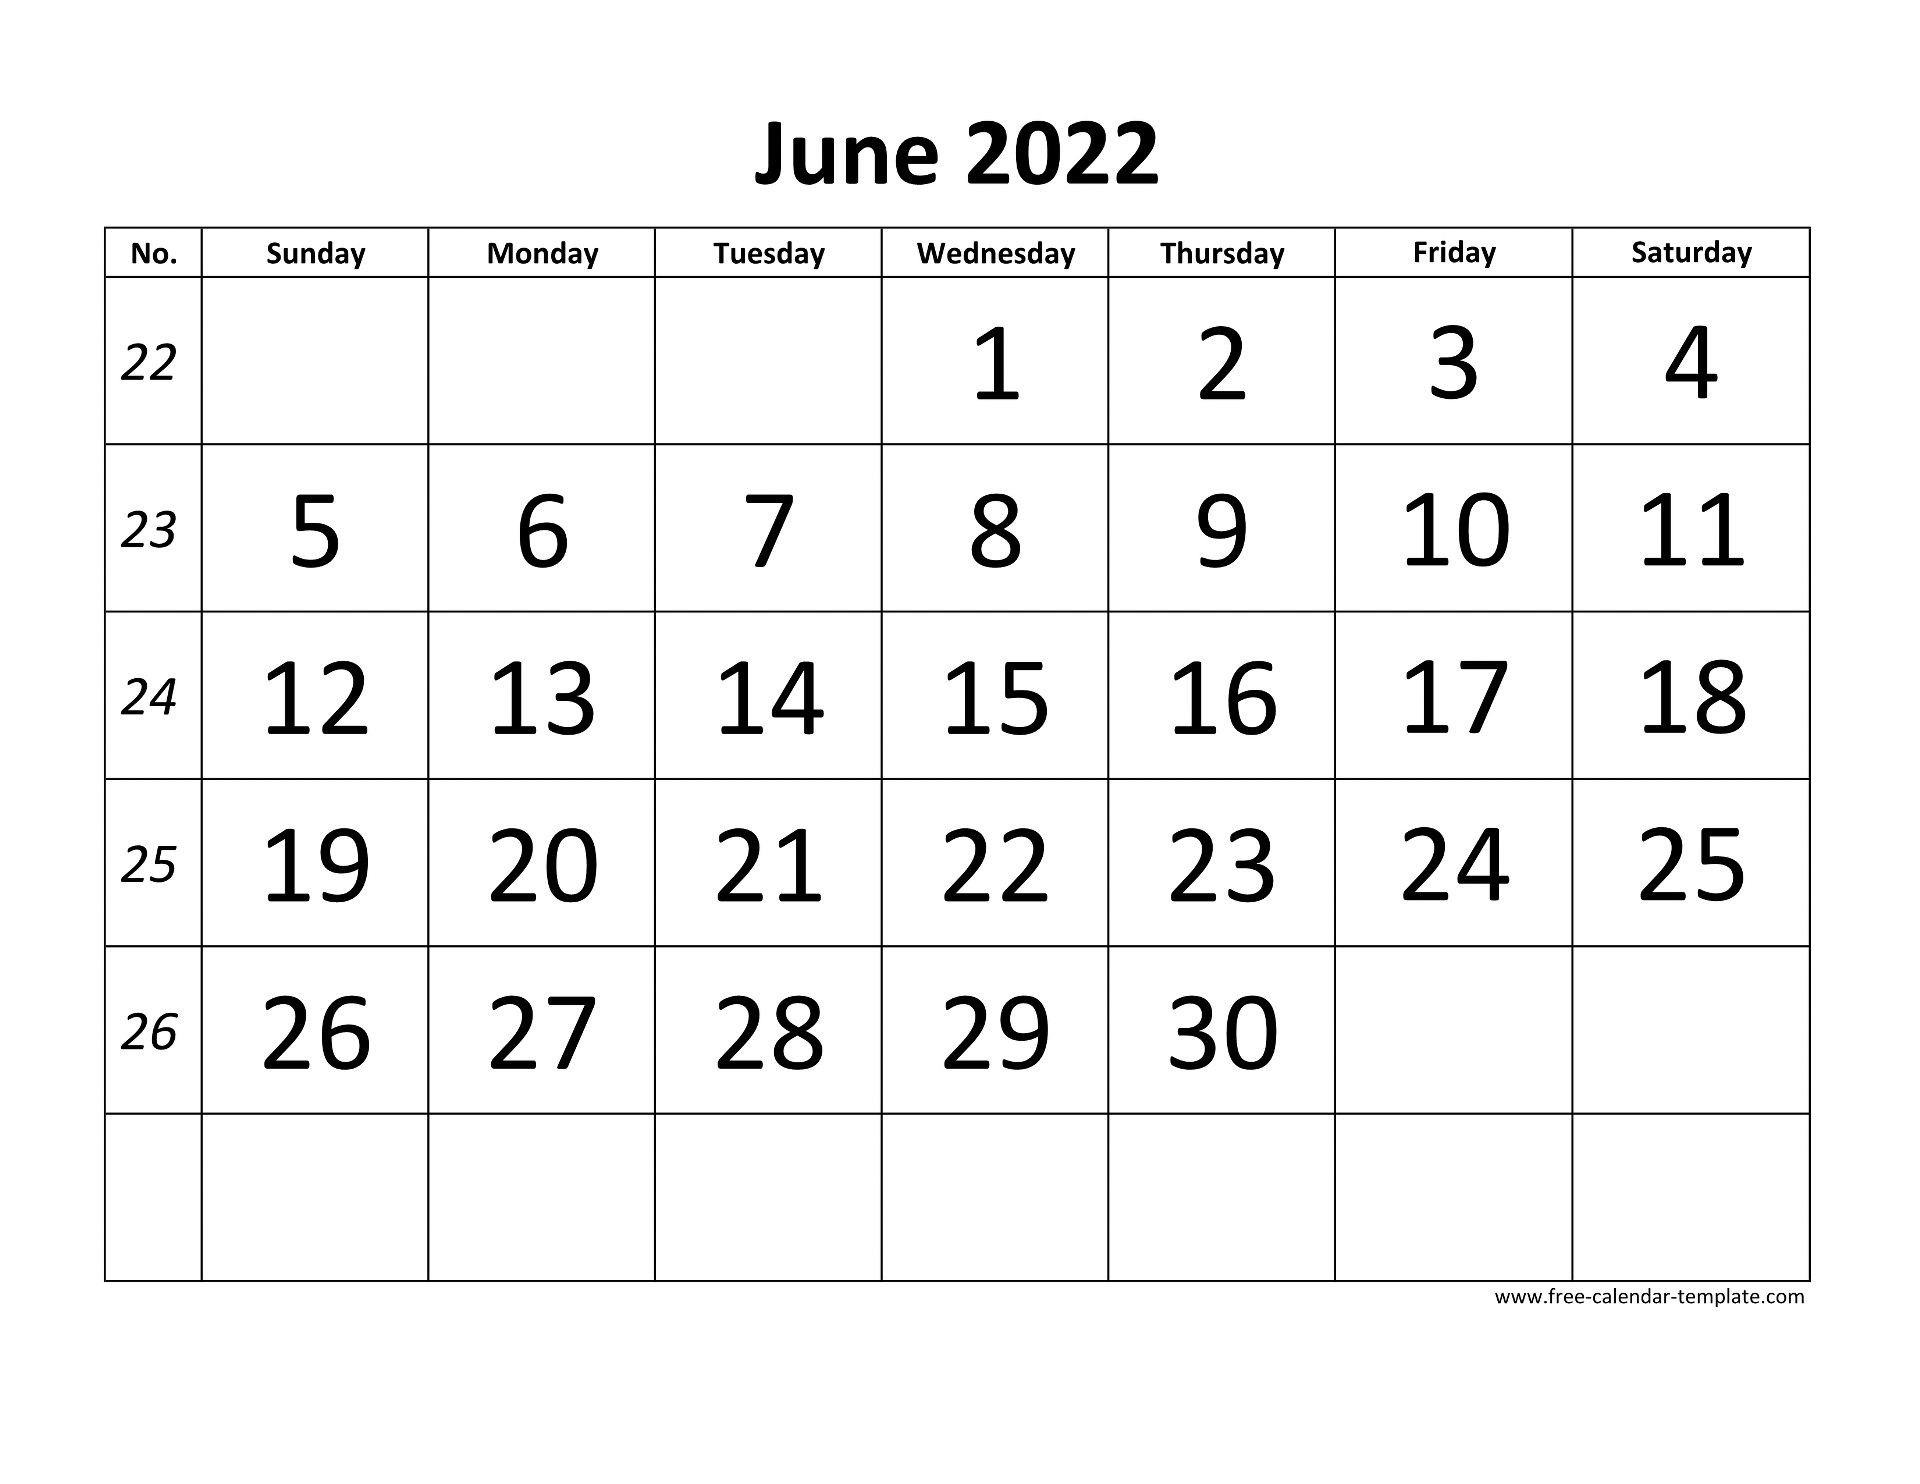 June 2022 Free Calendar Tempplate | Free-Calendar-Template  June Printable Calendar 2022